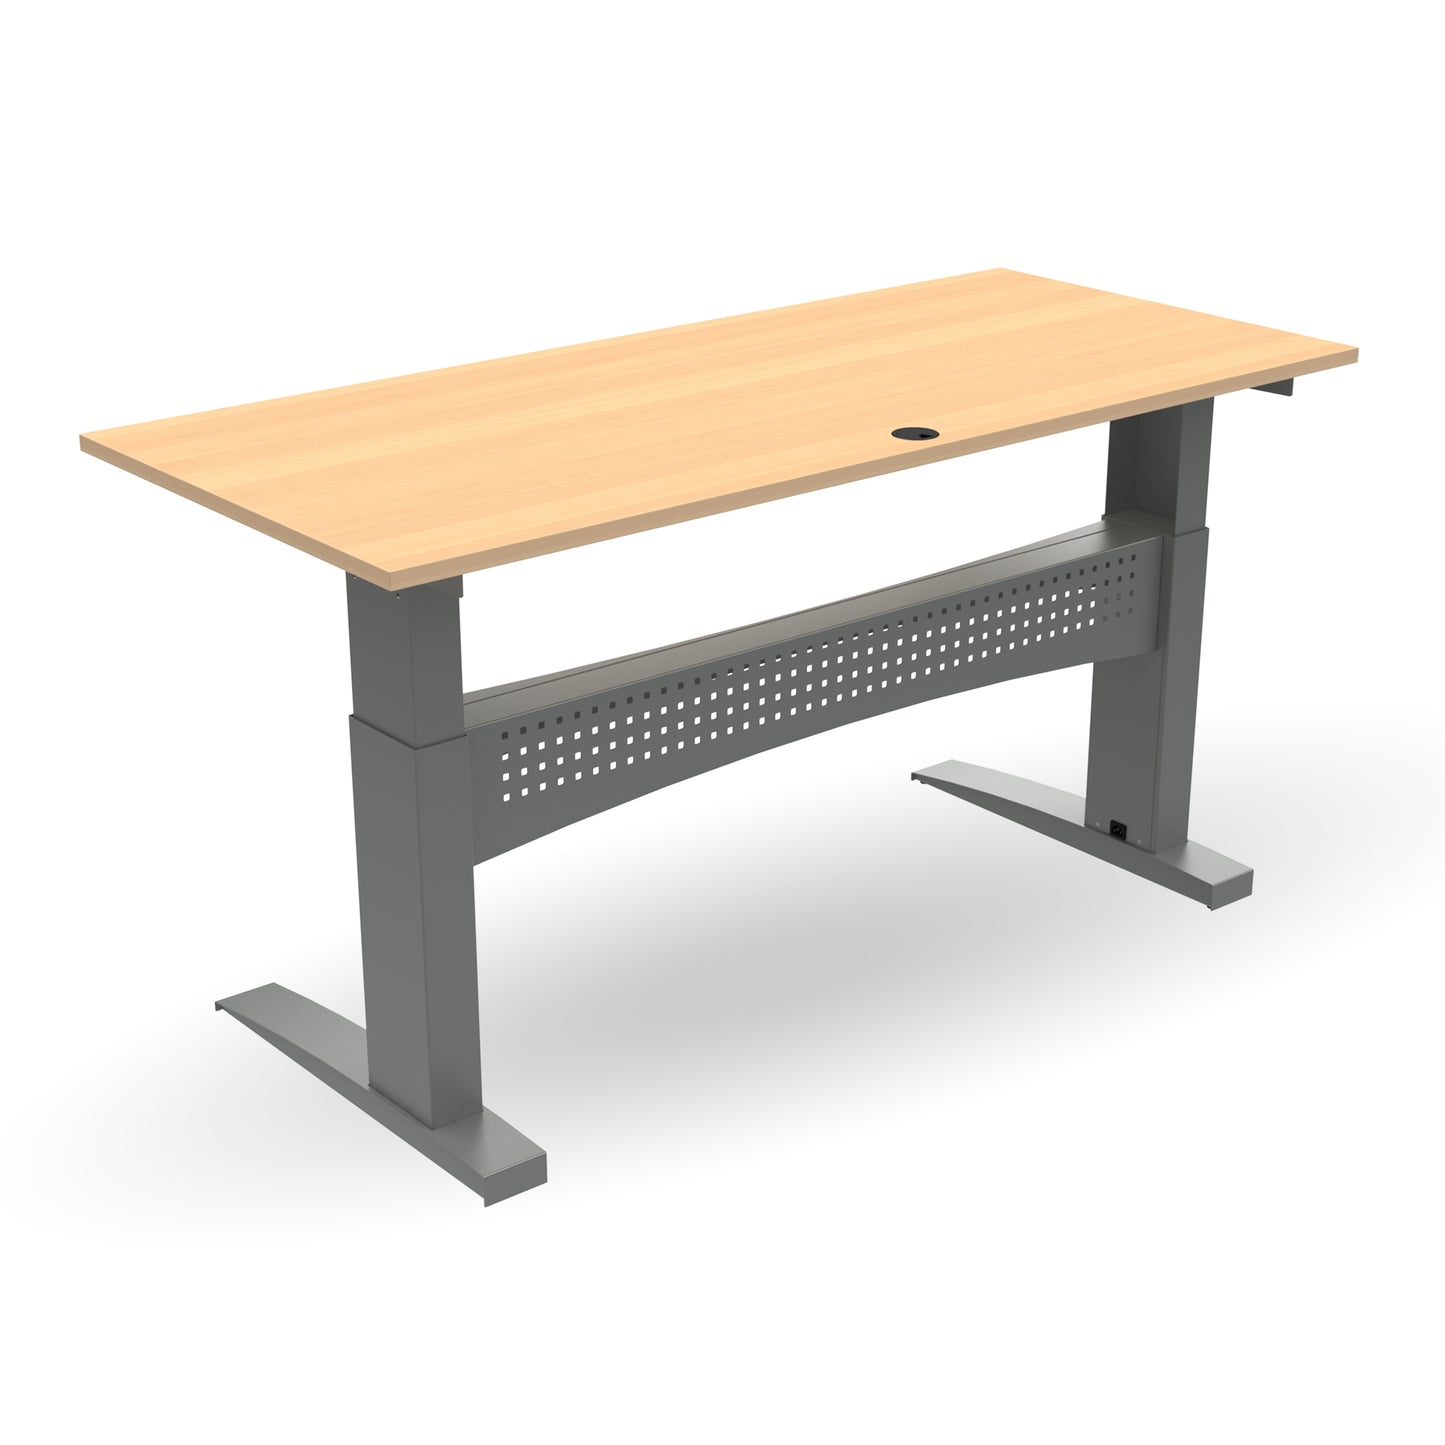 ConSet 501-11 Rectangular Height Adjustable Sit Stand Desk